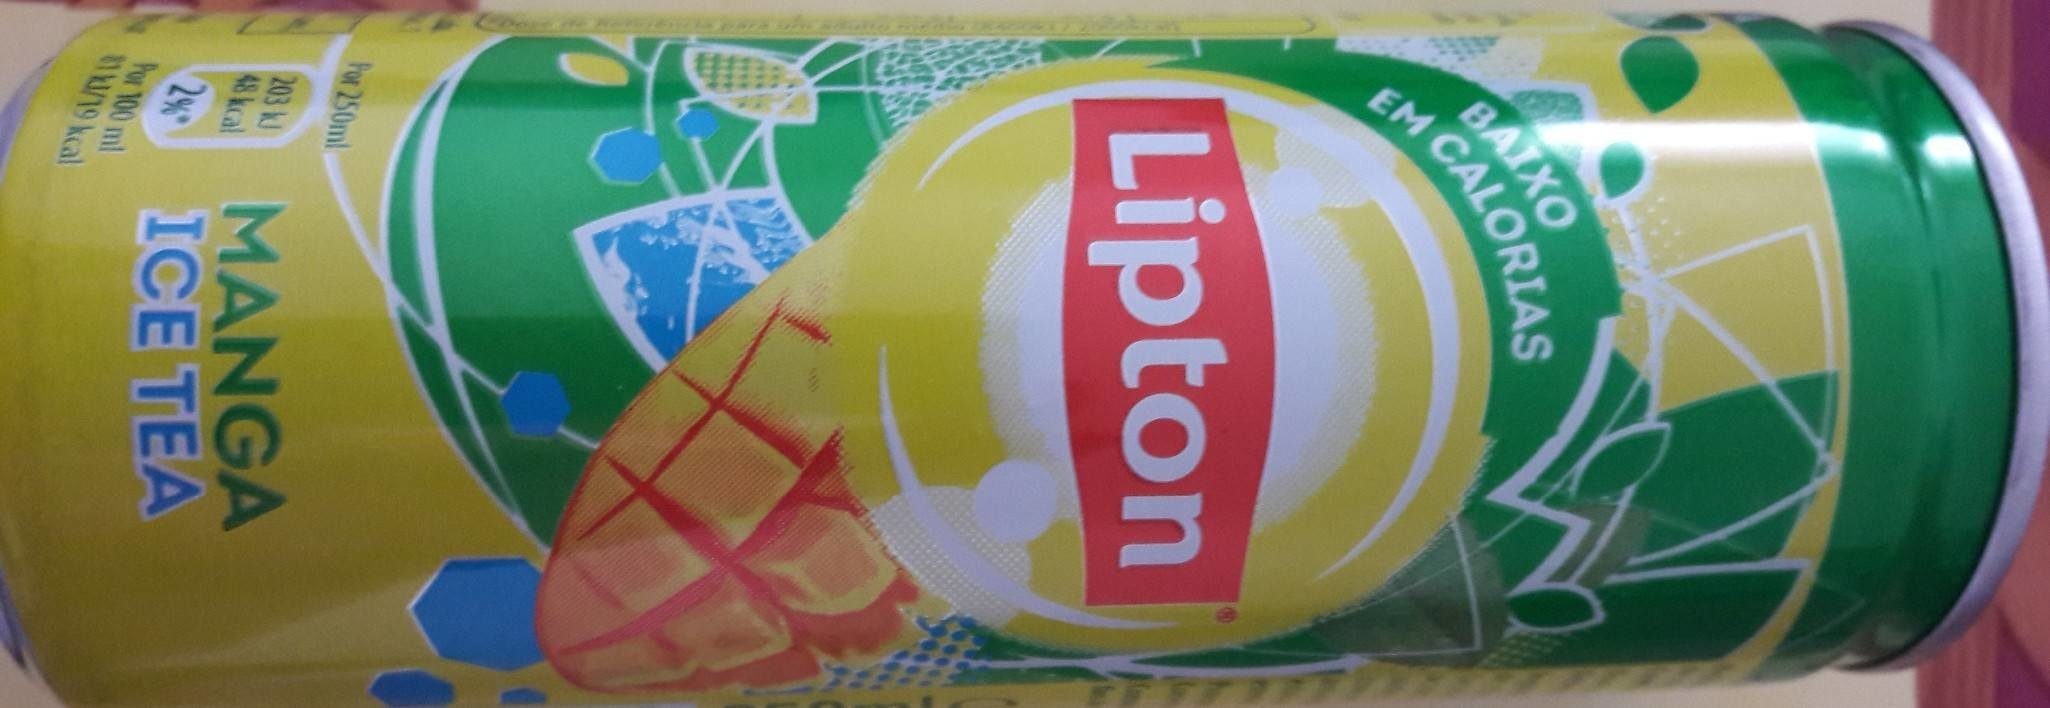 Lipton-ice Tea -mango-250ml-portugal - Tableau nutritionnel